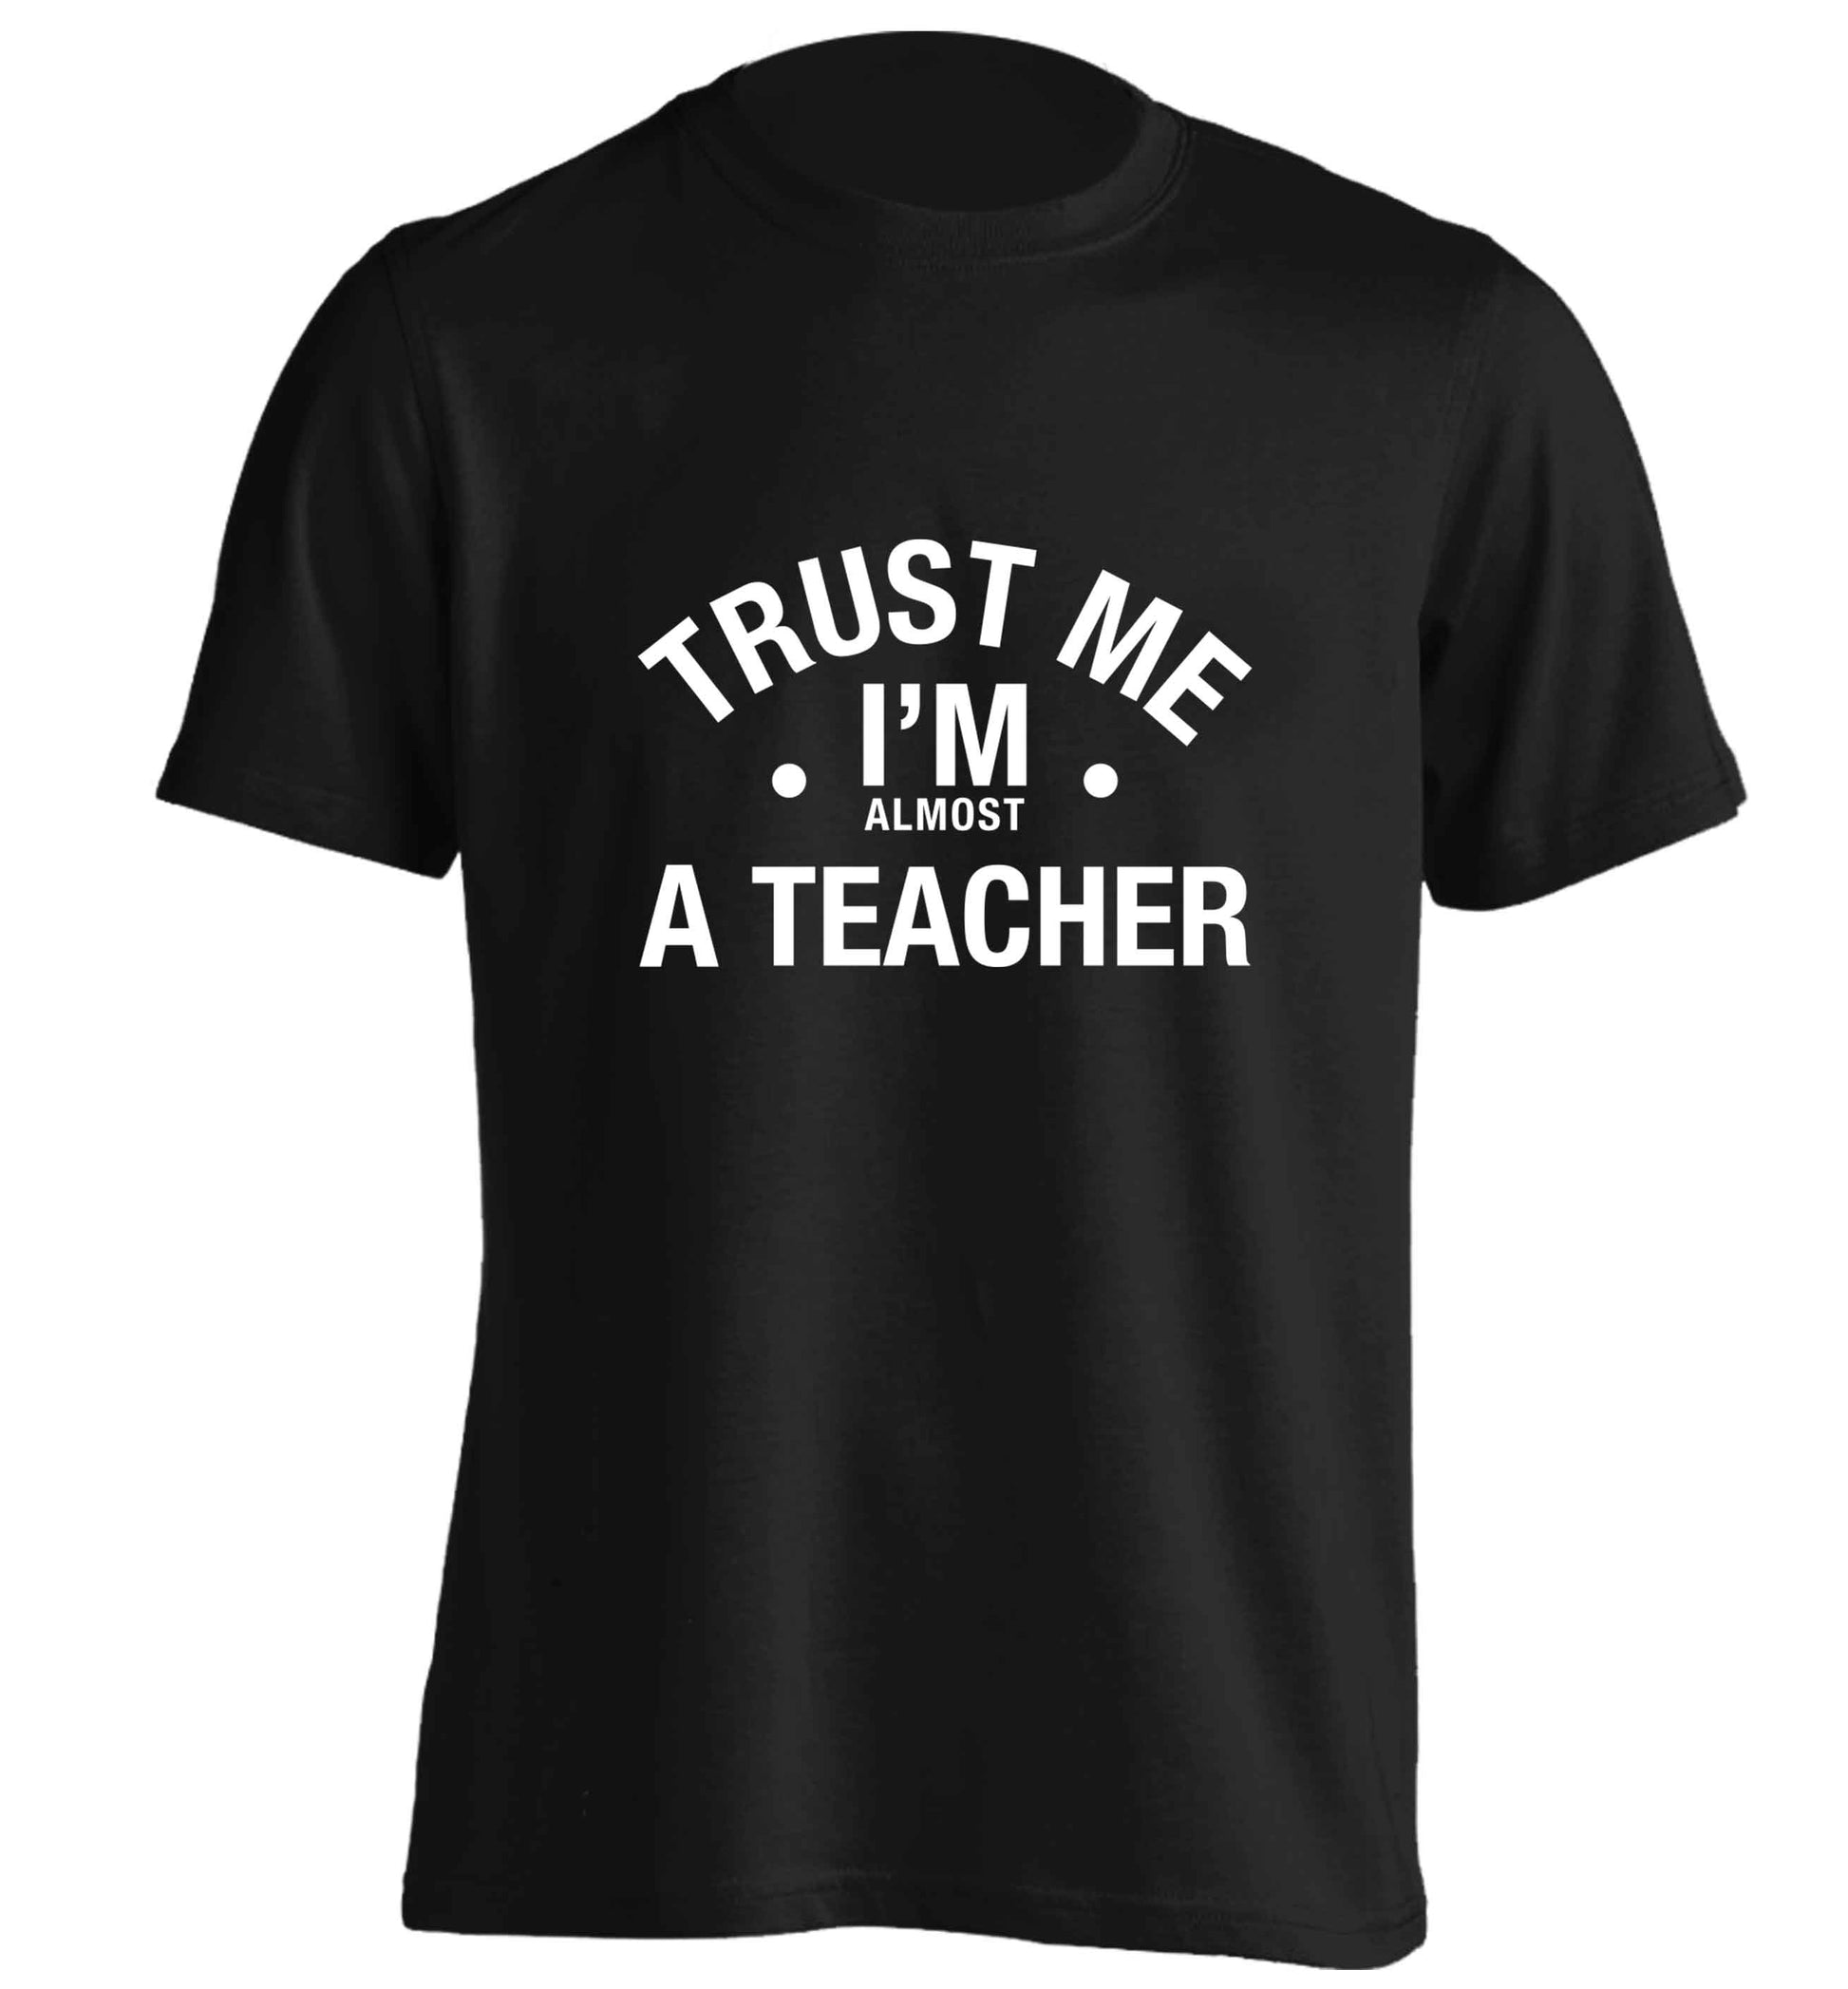 Trust me I'm almost a teacher adults unisex black Tshirt 2XL